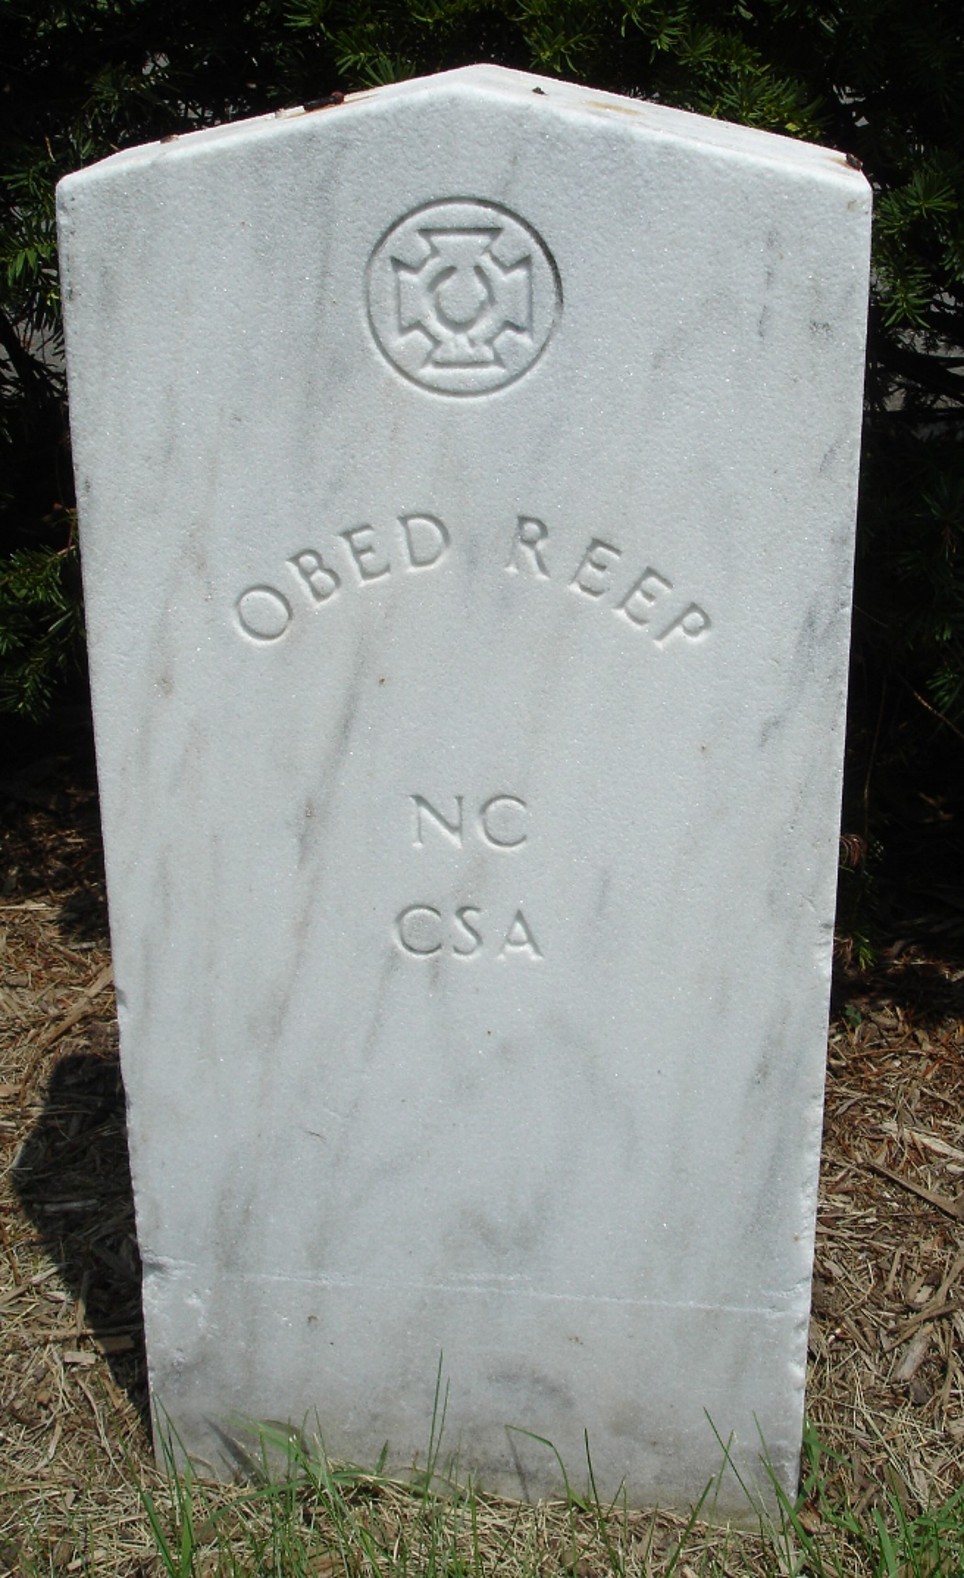 obed-reep-gravesite-photo-july-2006-002